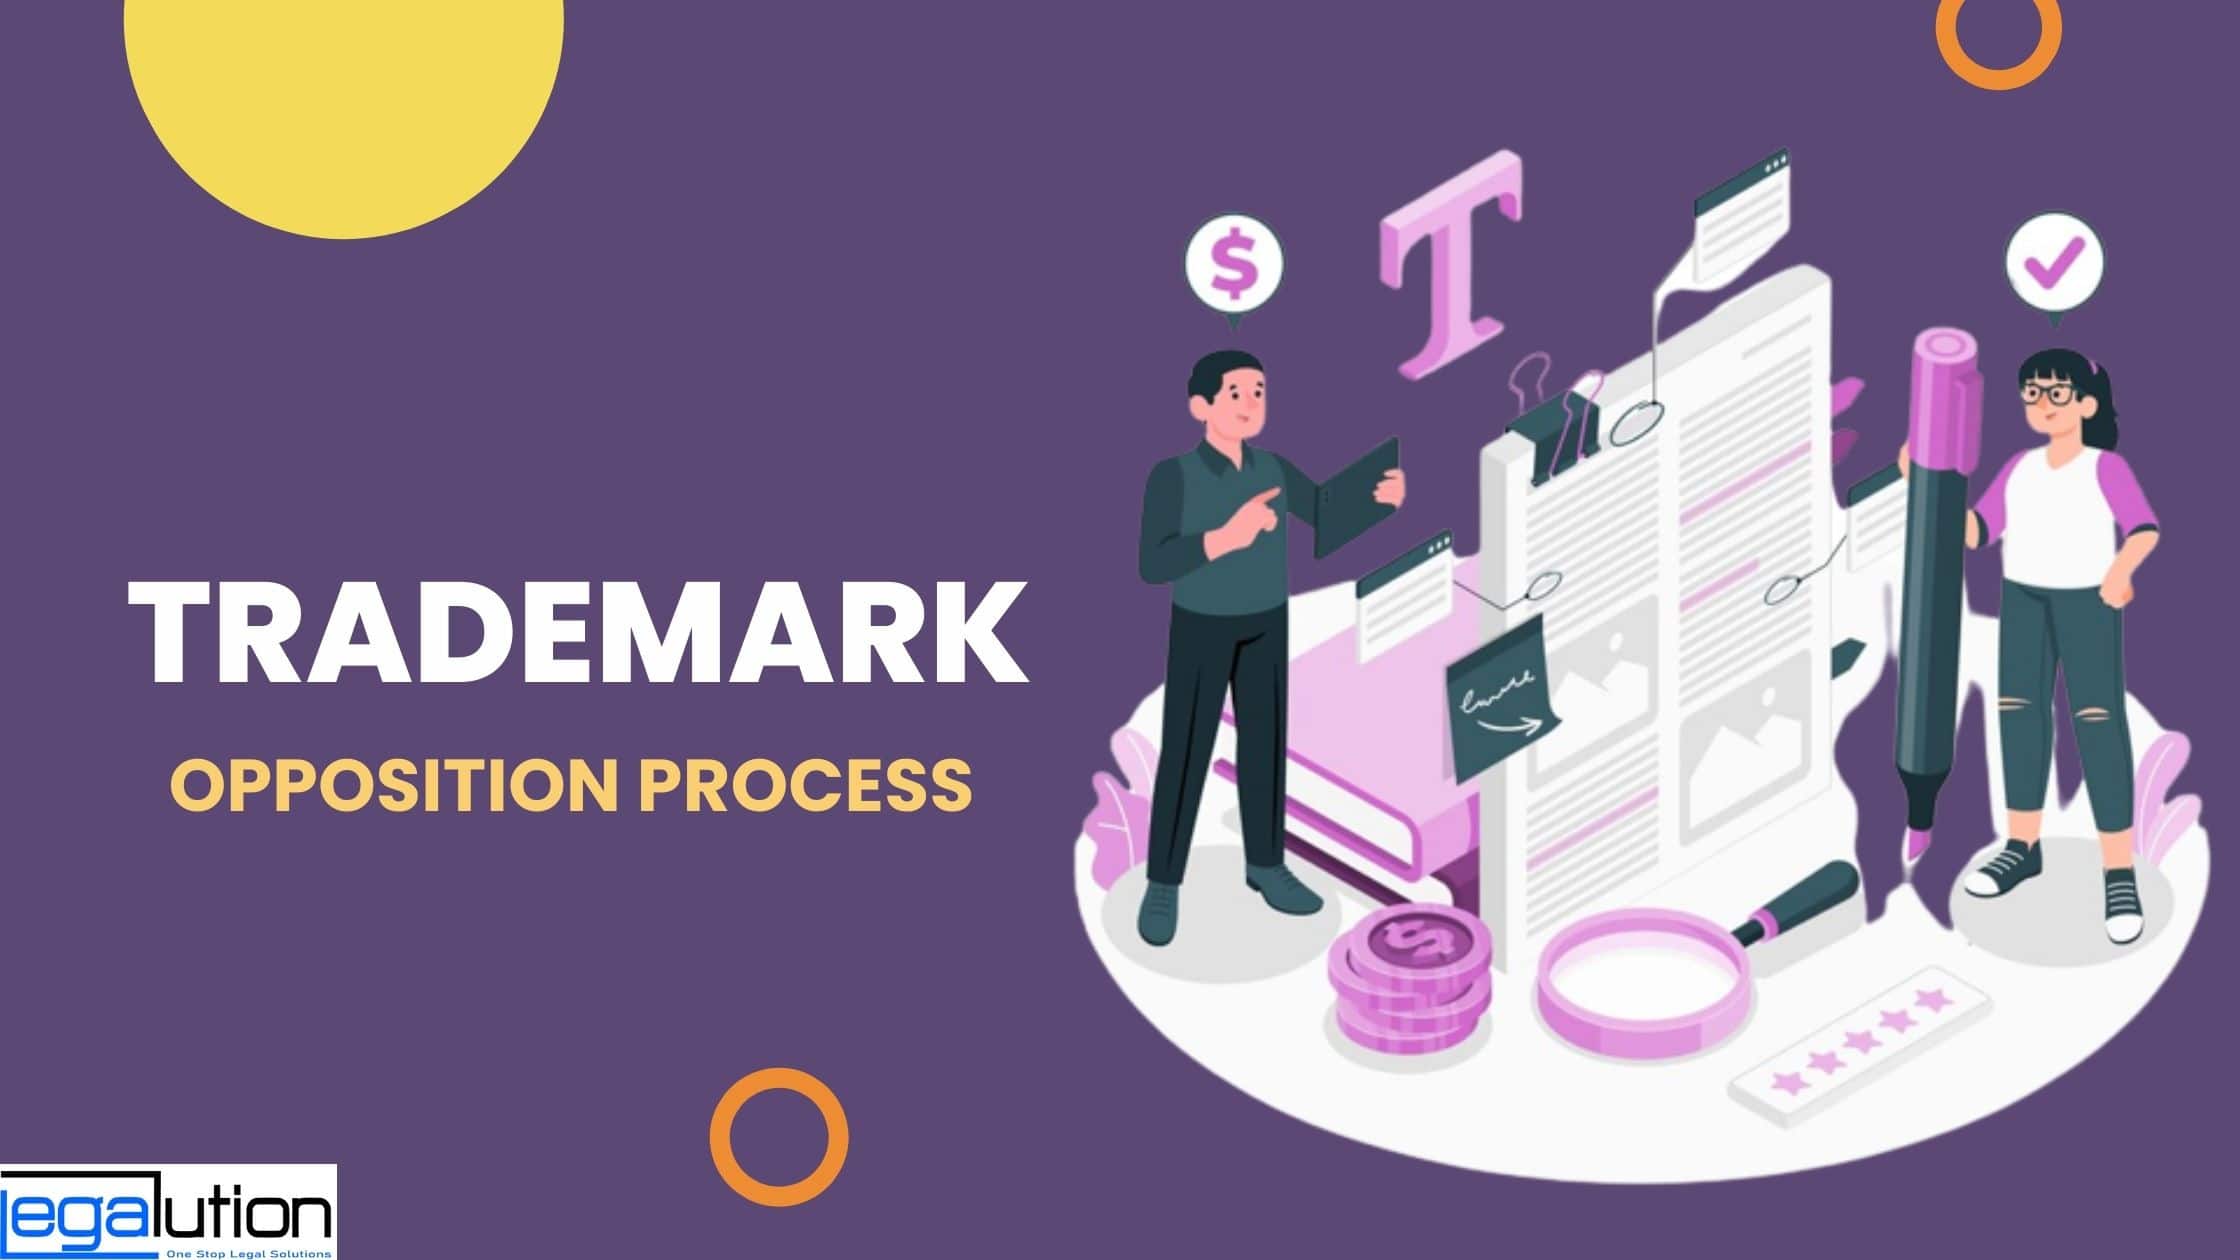 Trademark Opposition Process